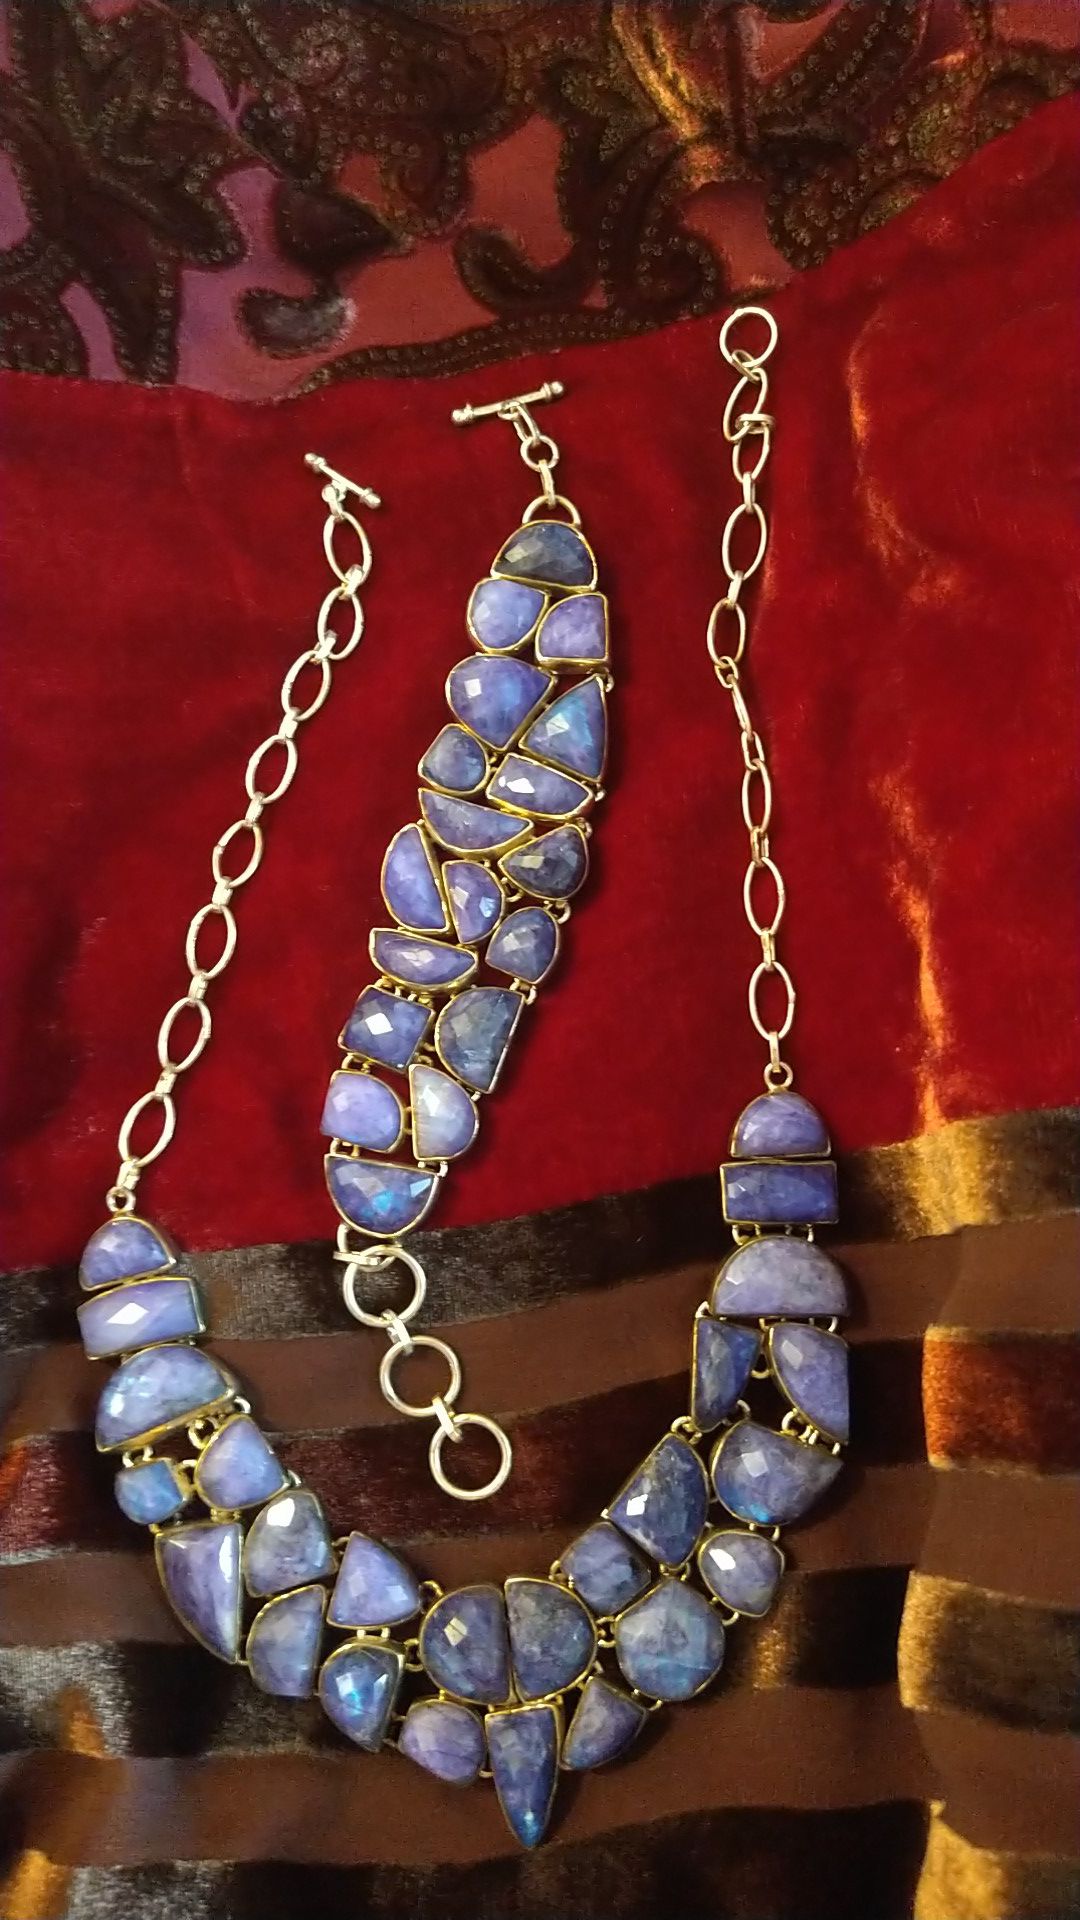 purple moon stone necklace and bracelet set